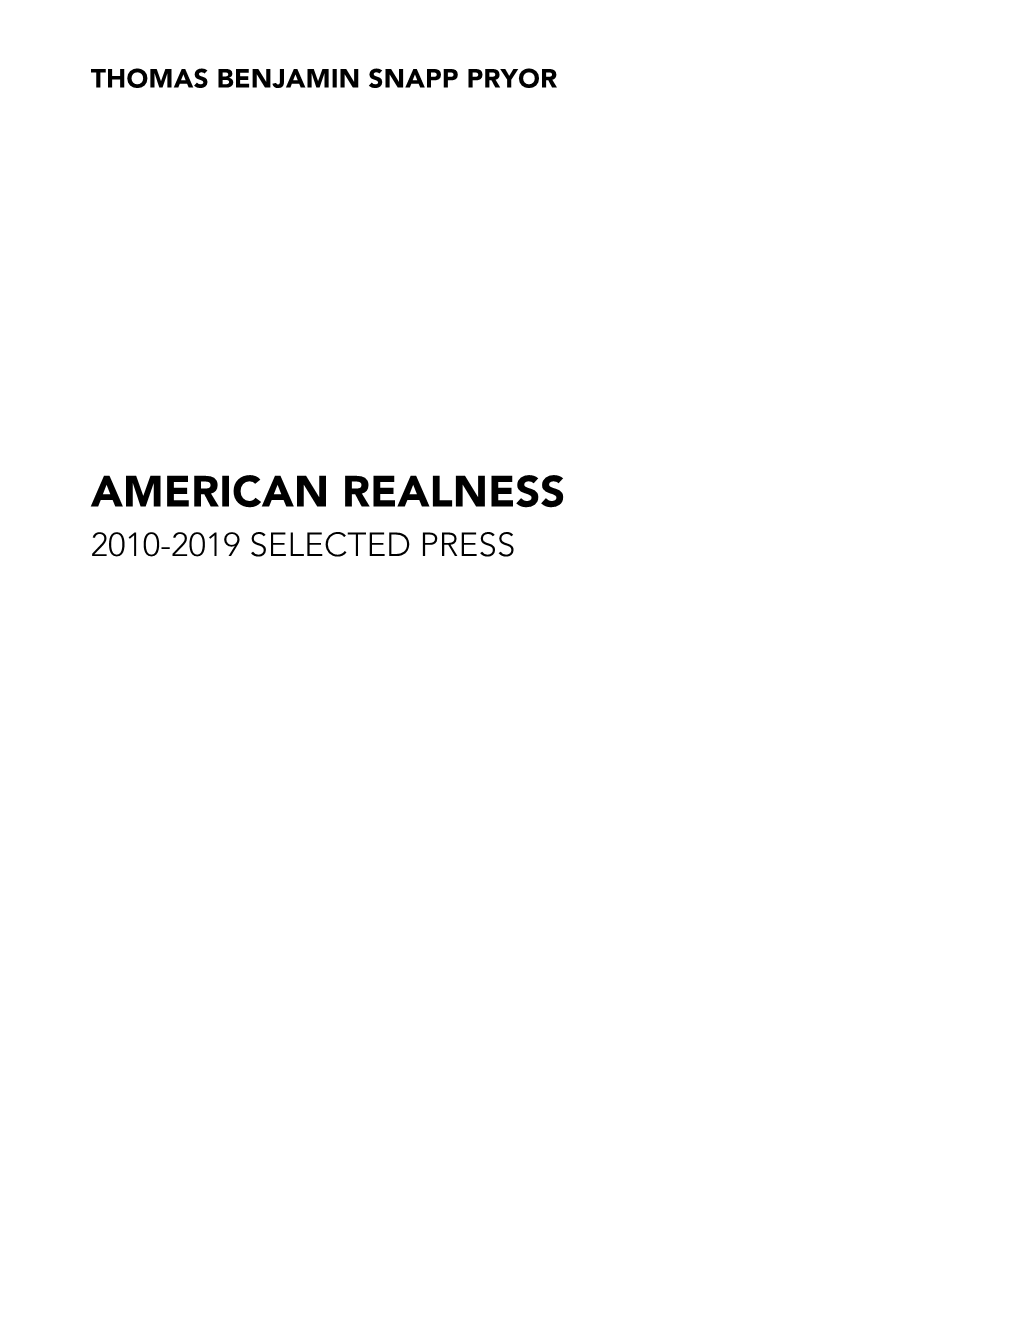 American Realness 2010-2019 Selected Press